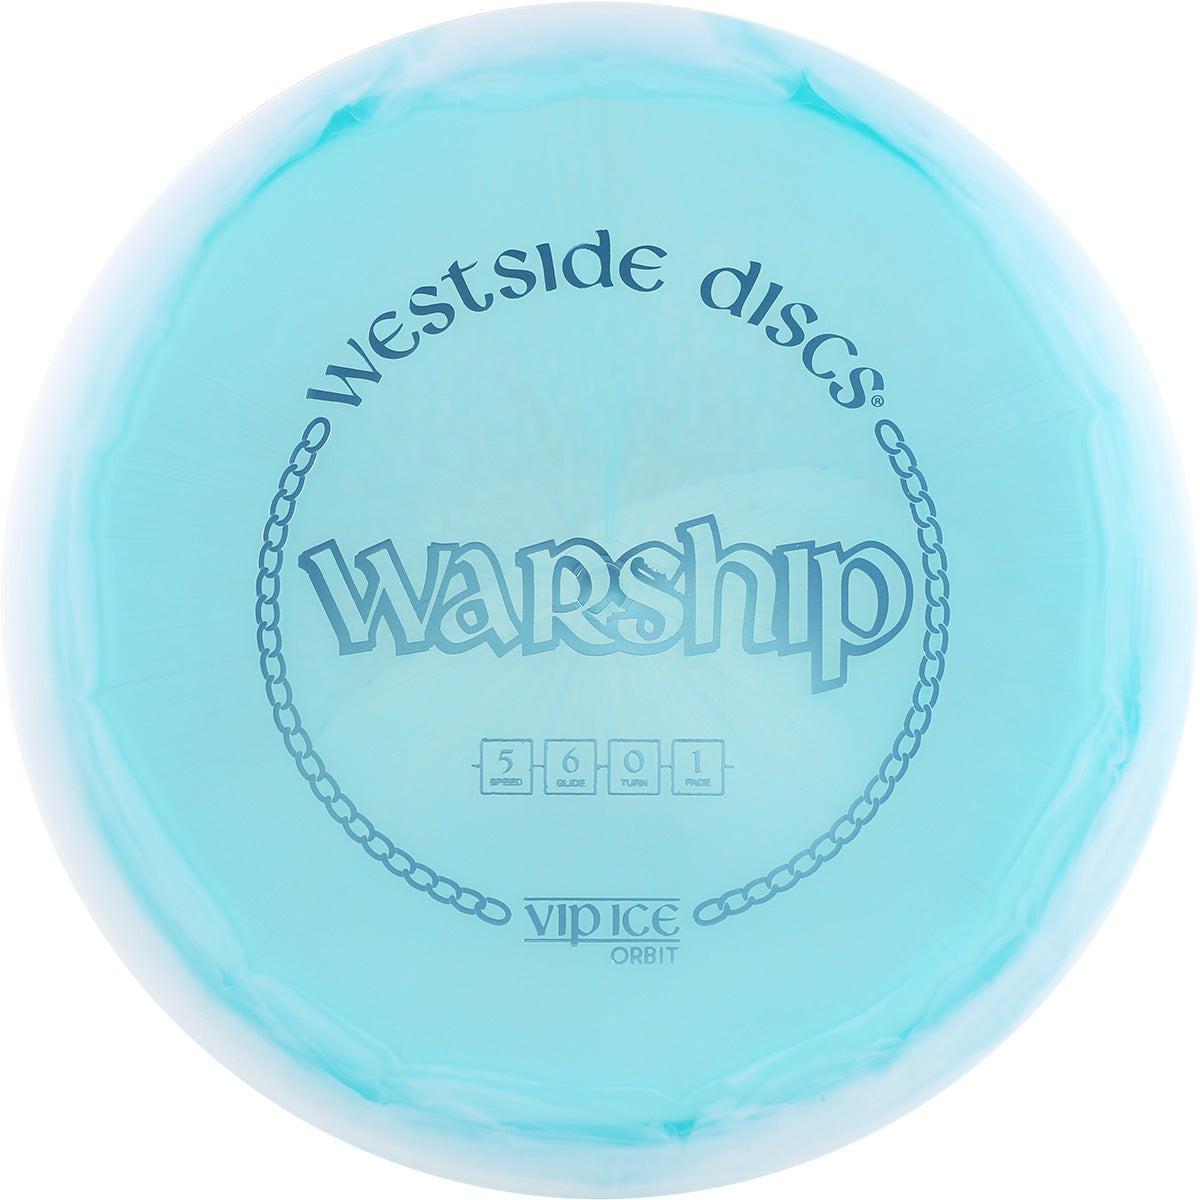 Westside Warship - Ice Orbit